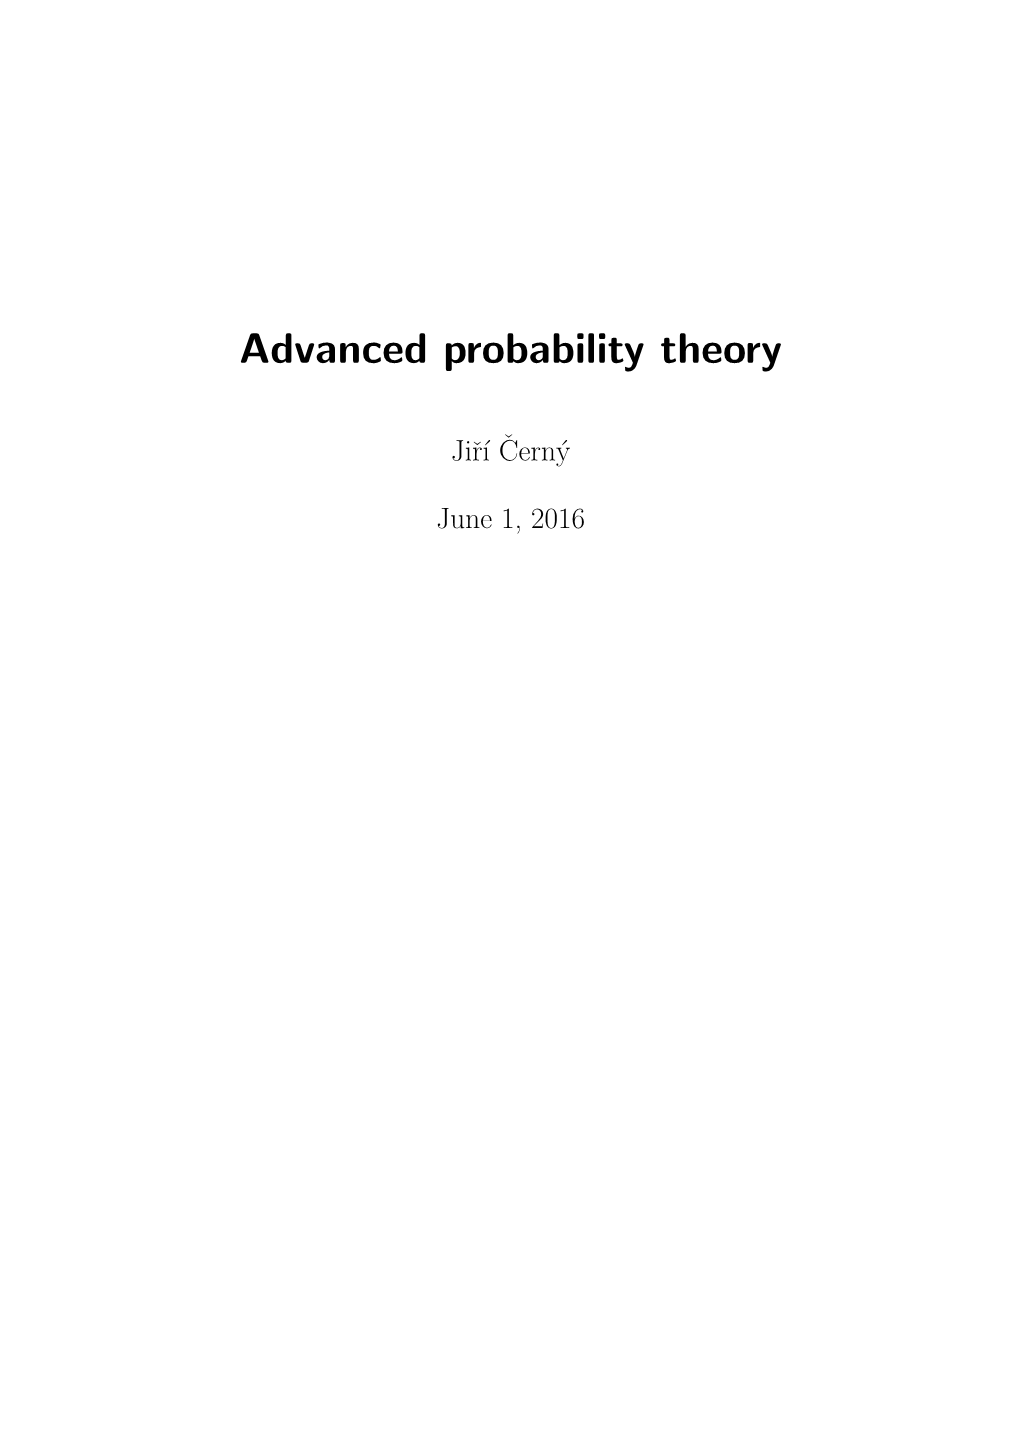 Advanced Probability Theory